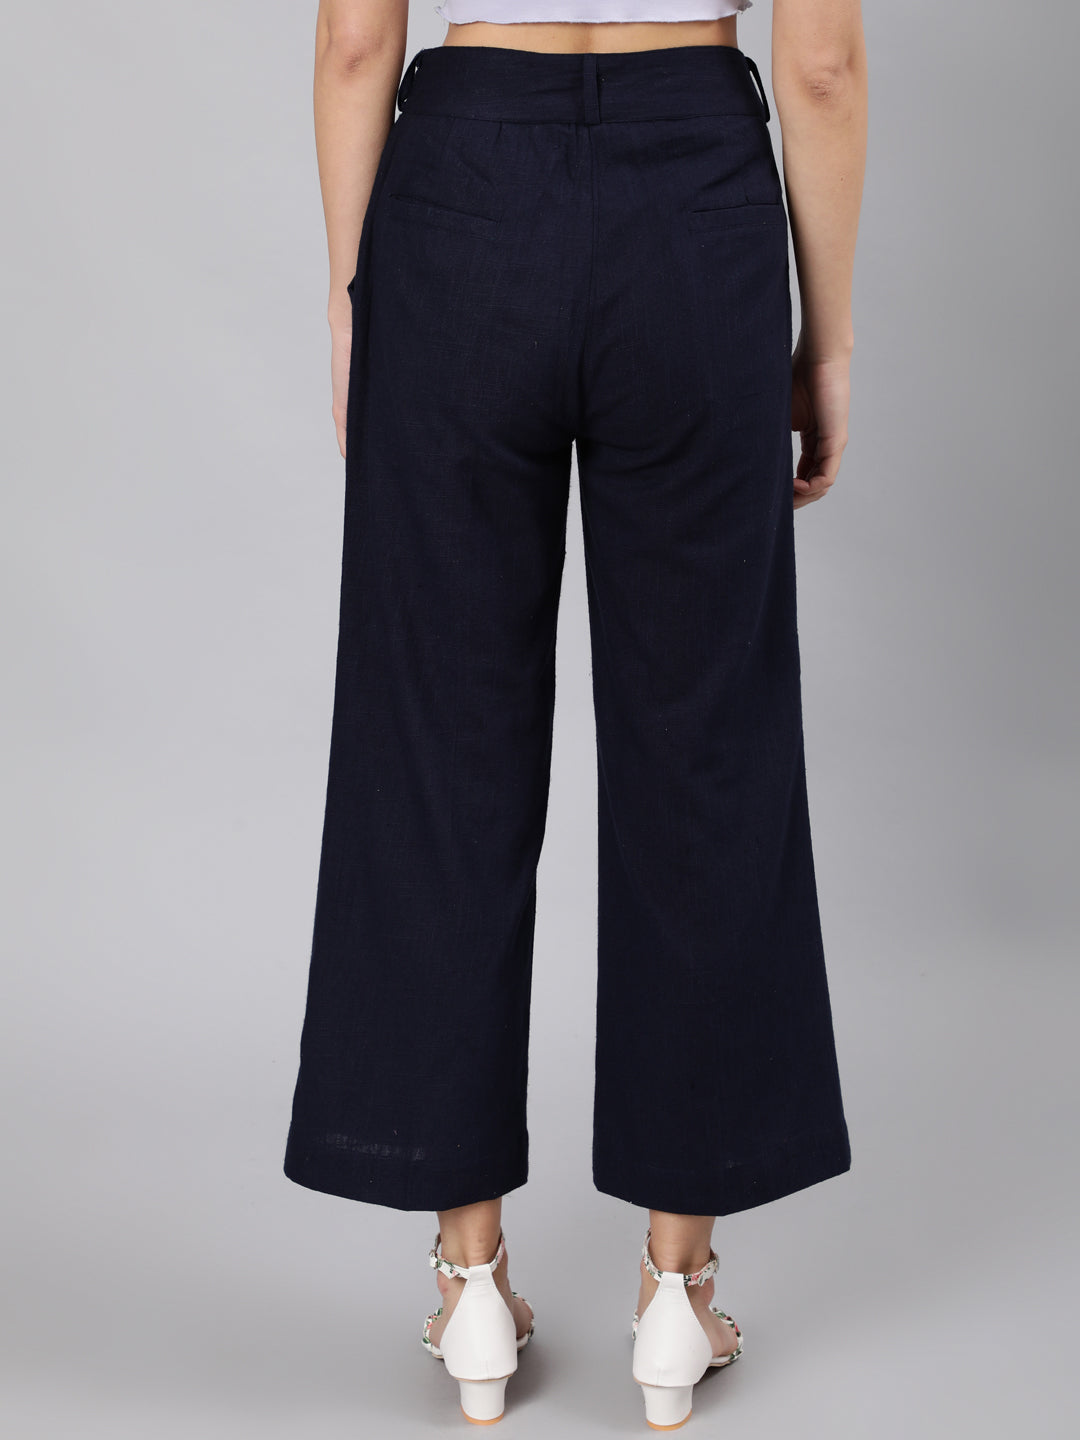 Shop high waist parallel jeans